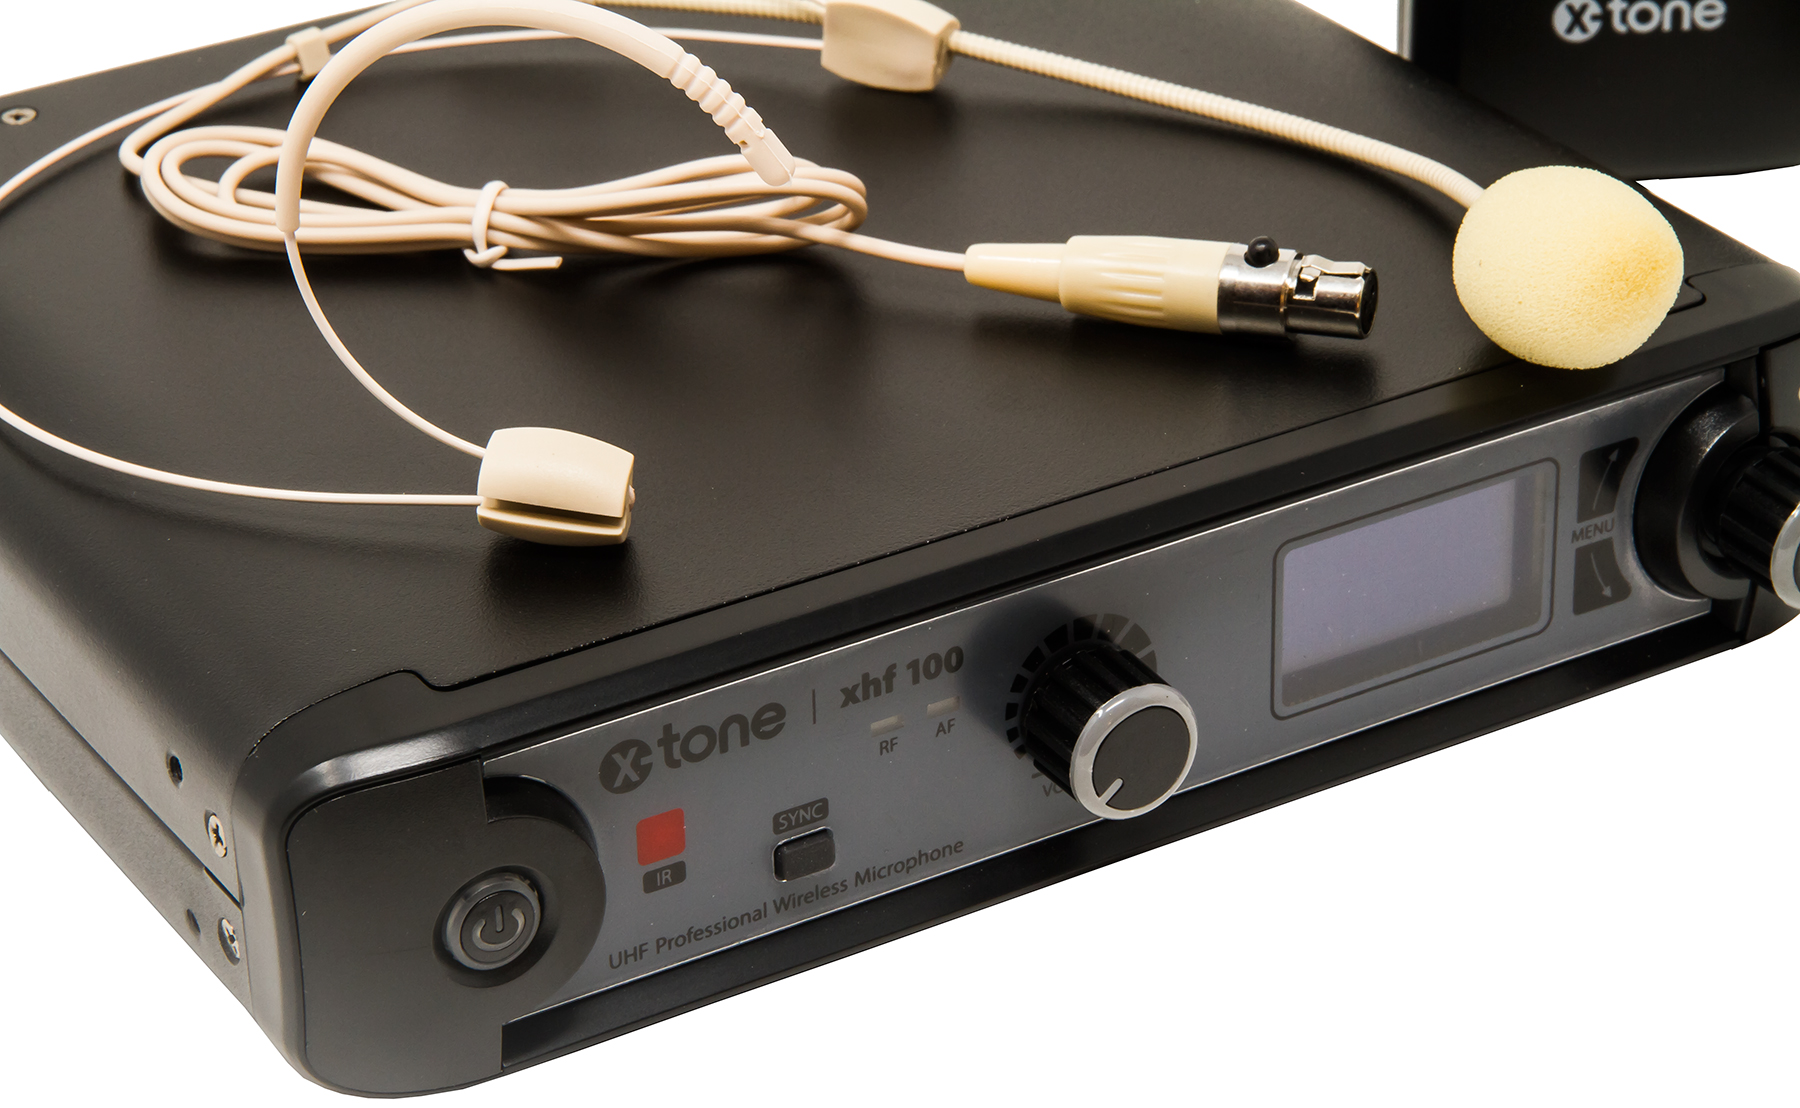 X-tone Xhf100h Systeme Hf Serre Tete Frequence Fixe - Wireless headworn microphone - Variation 1